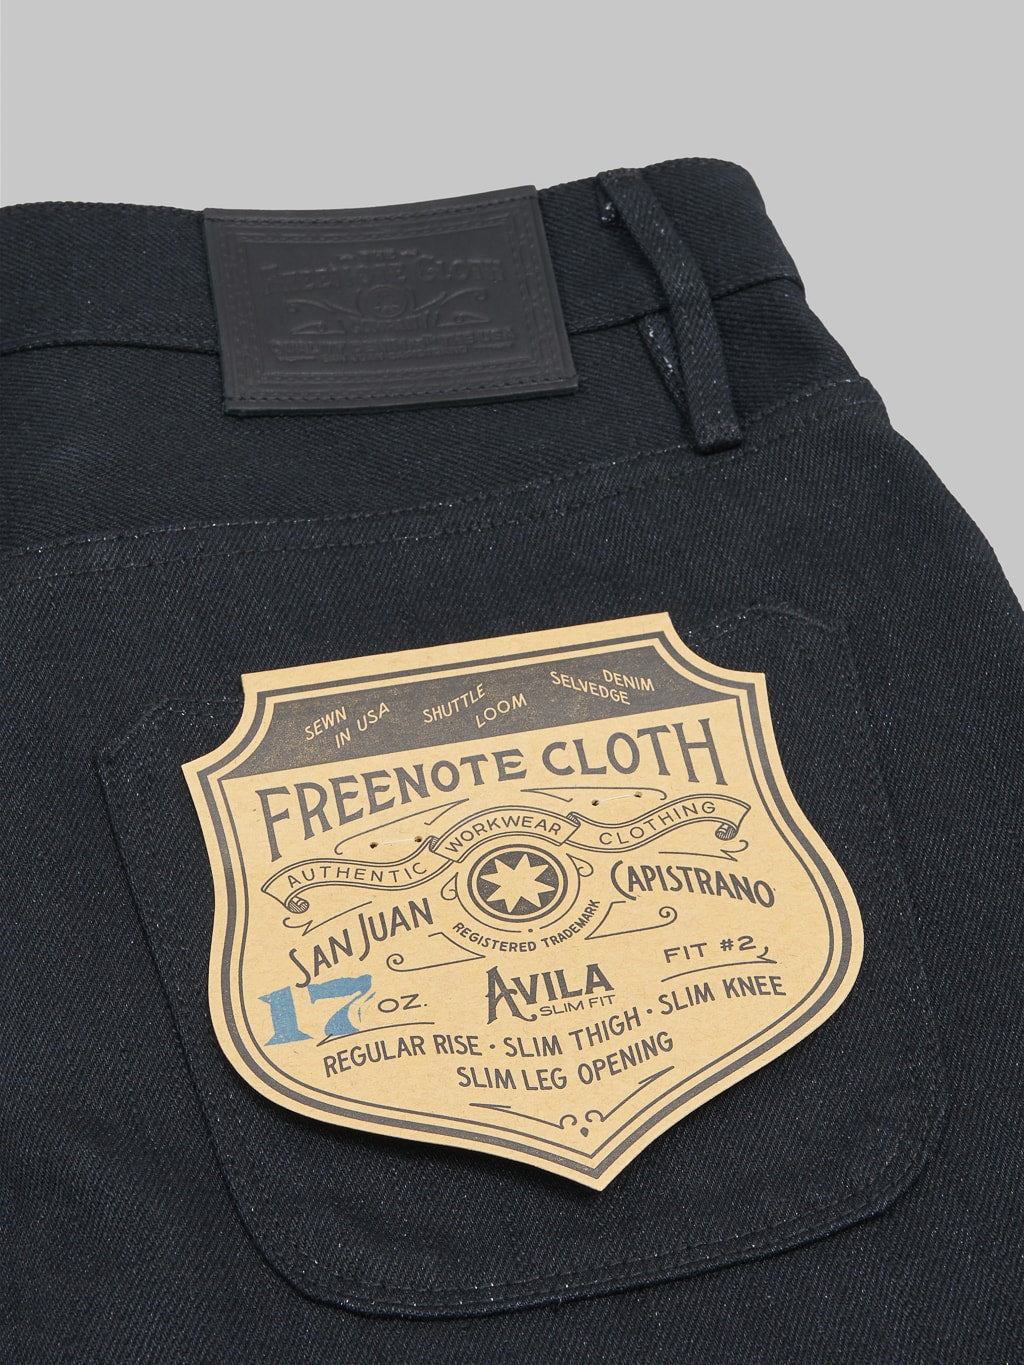 Freenote Cloth Avila 17oz Black Denim Slim Taper Jeans closeup